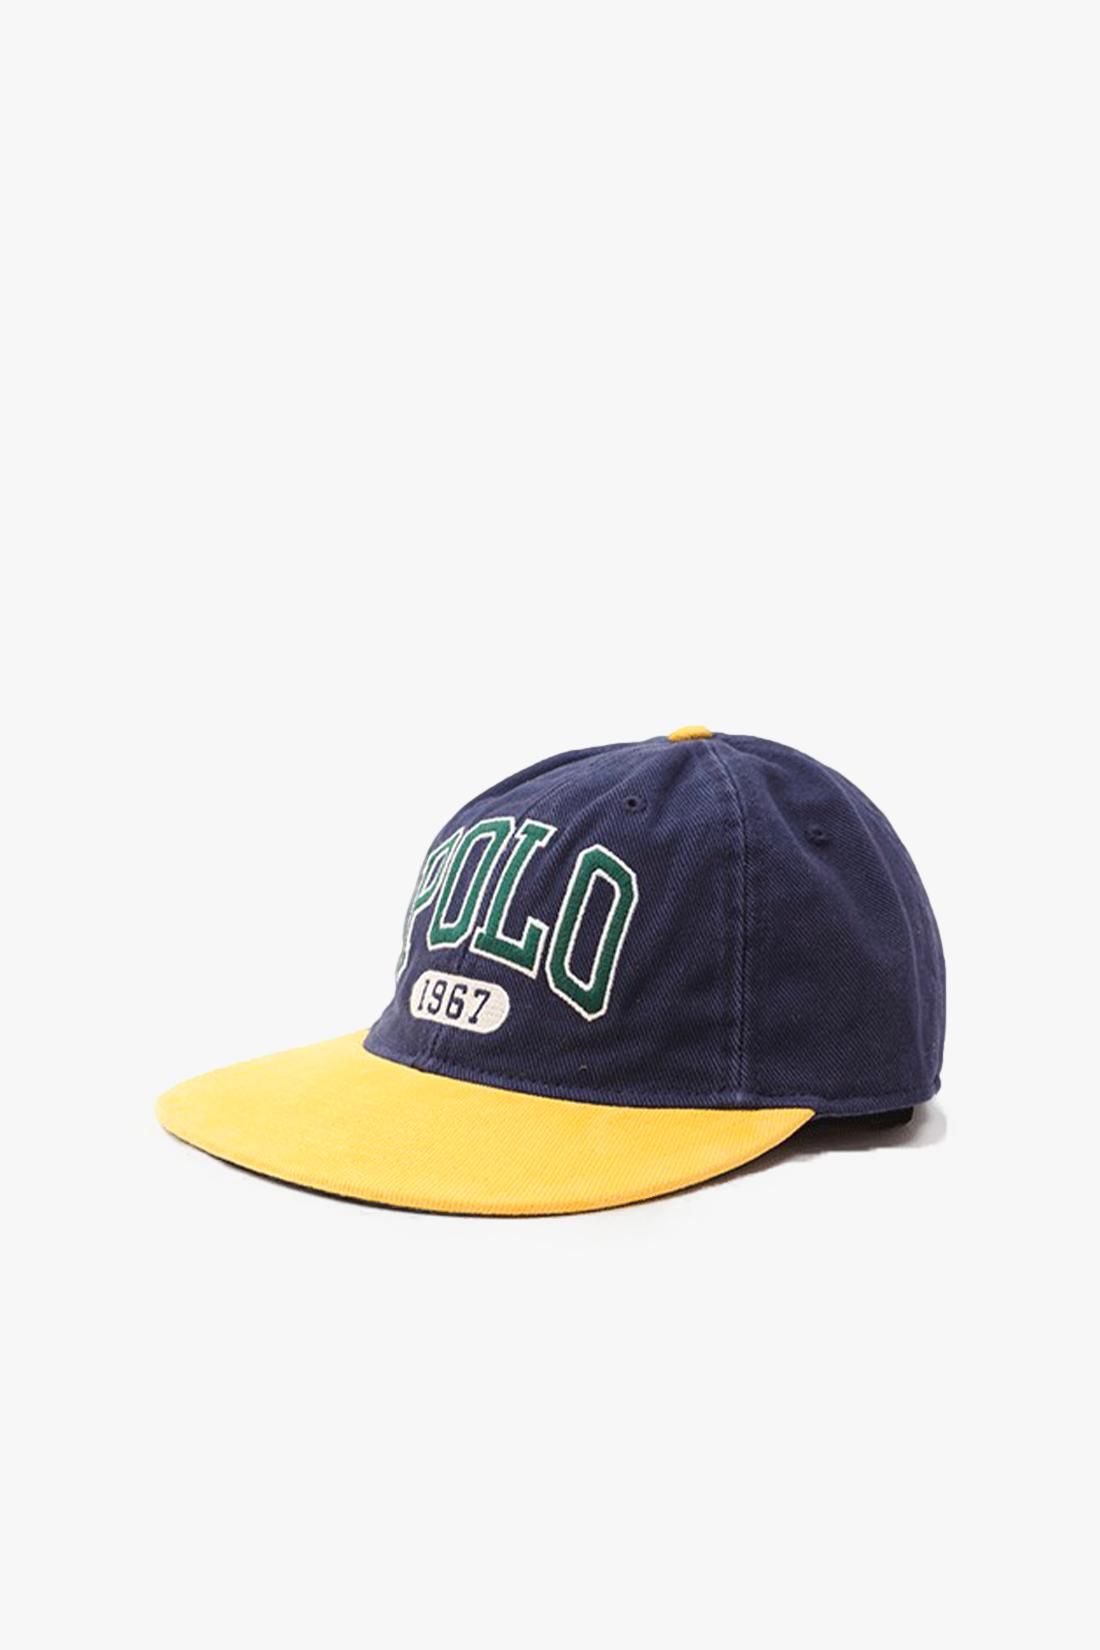 Authentic baseball cap Navy/yellow